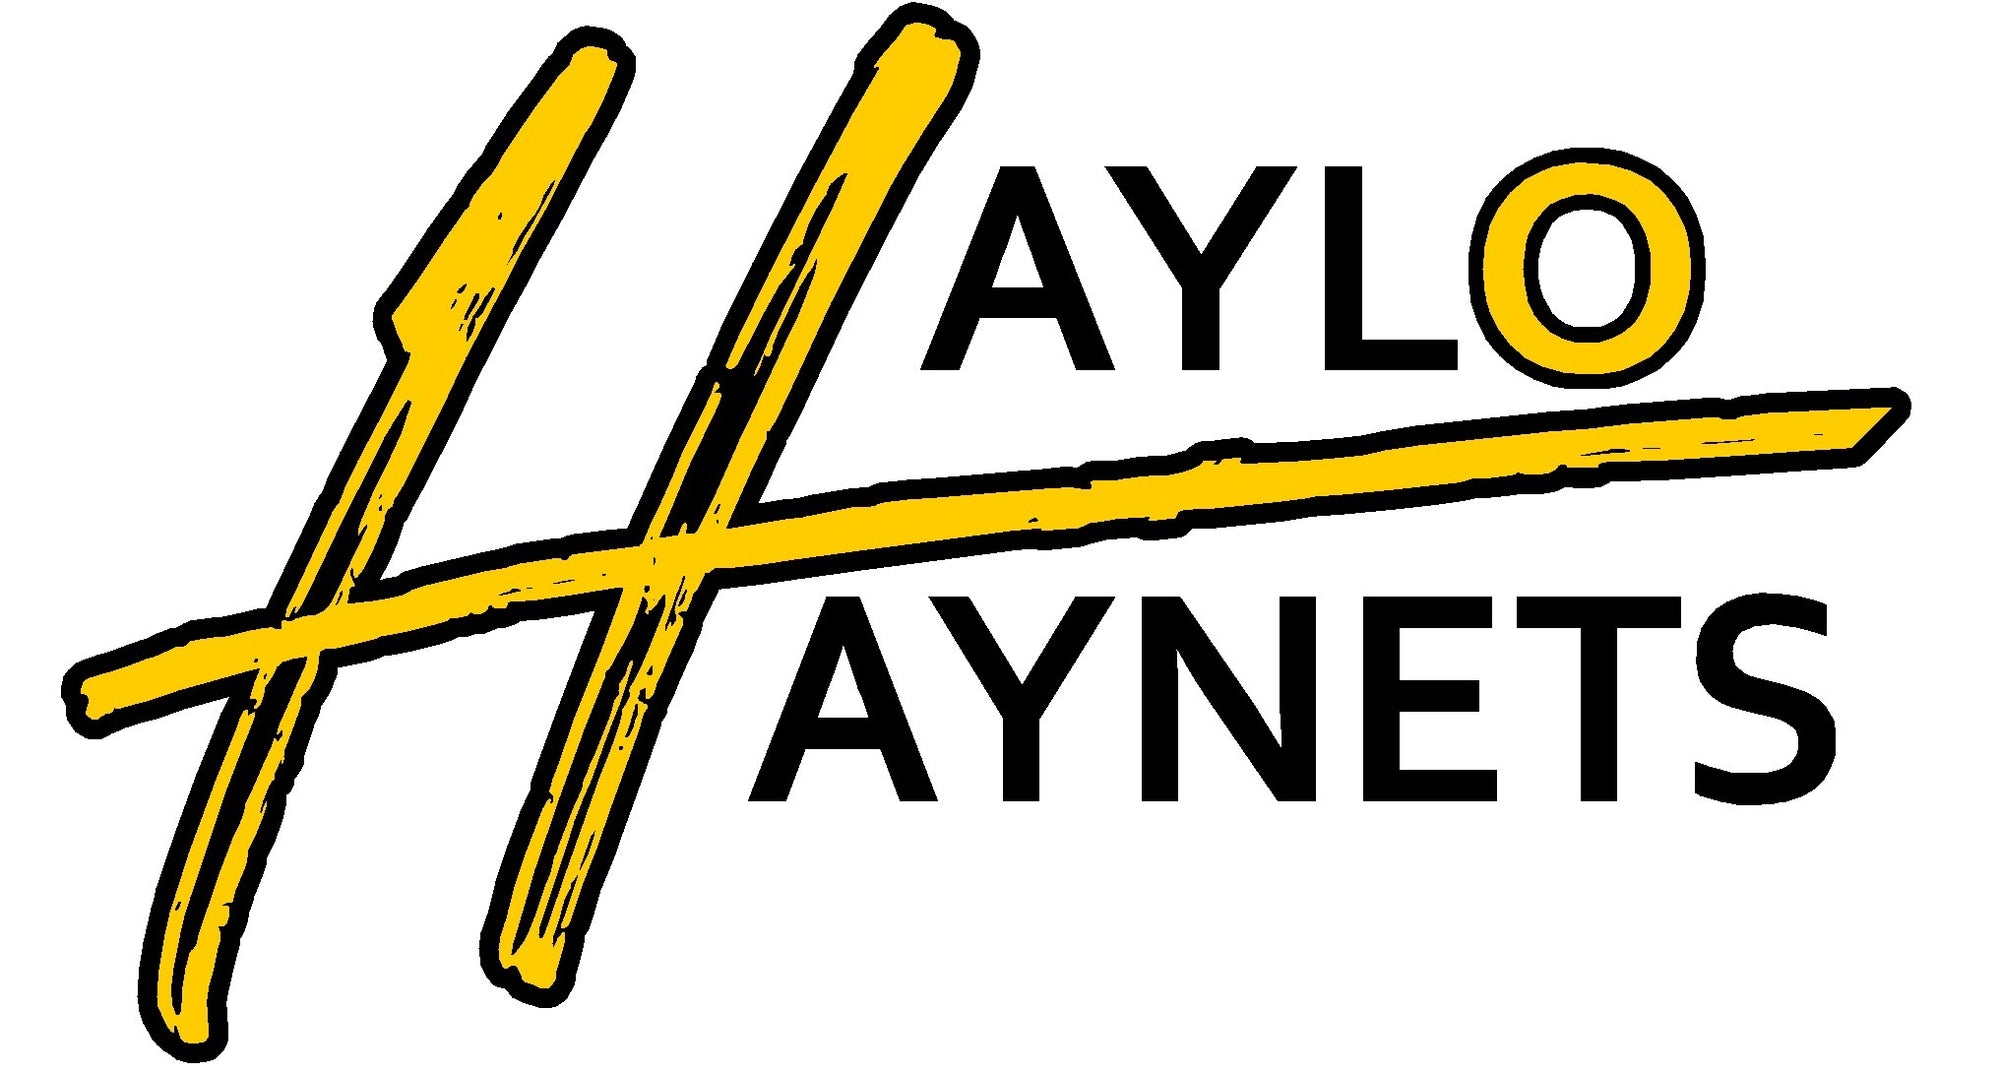 Haylo Haynets, LLC